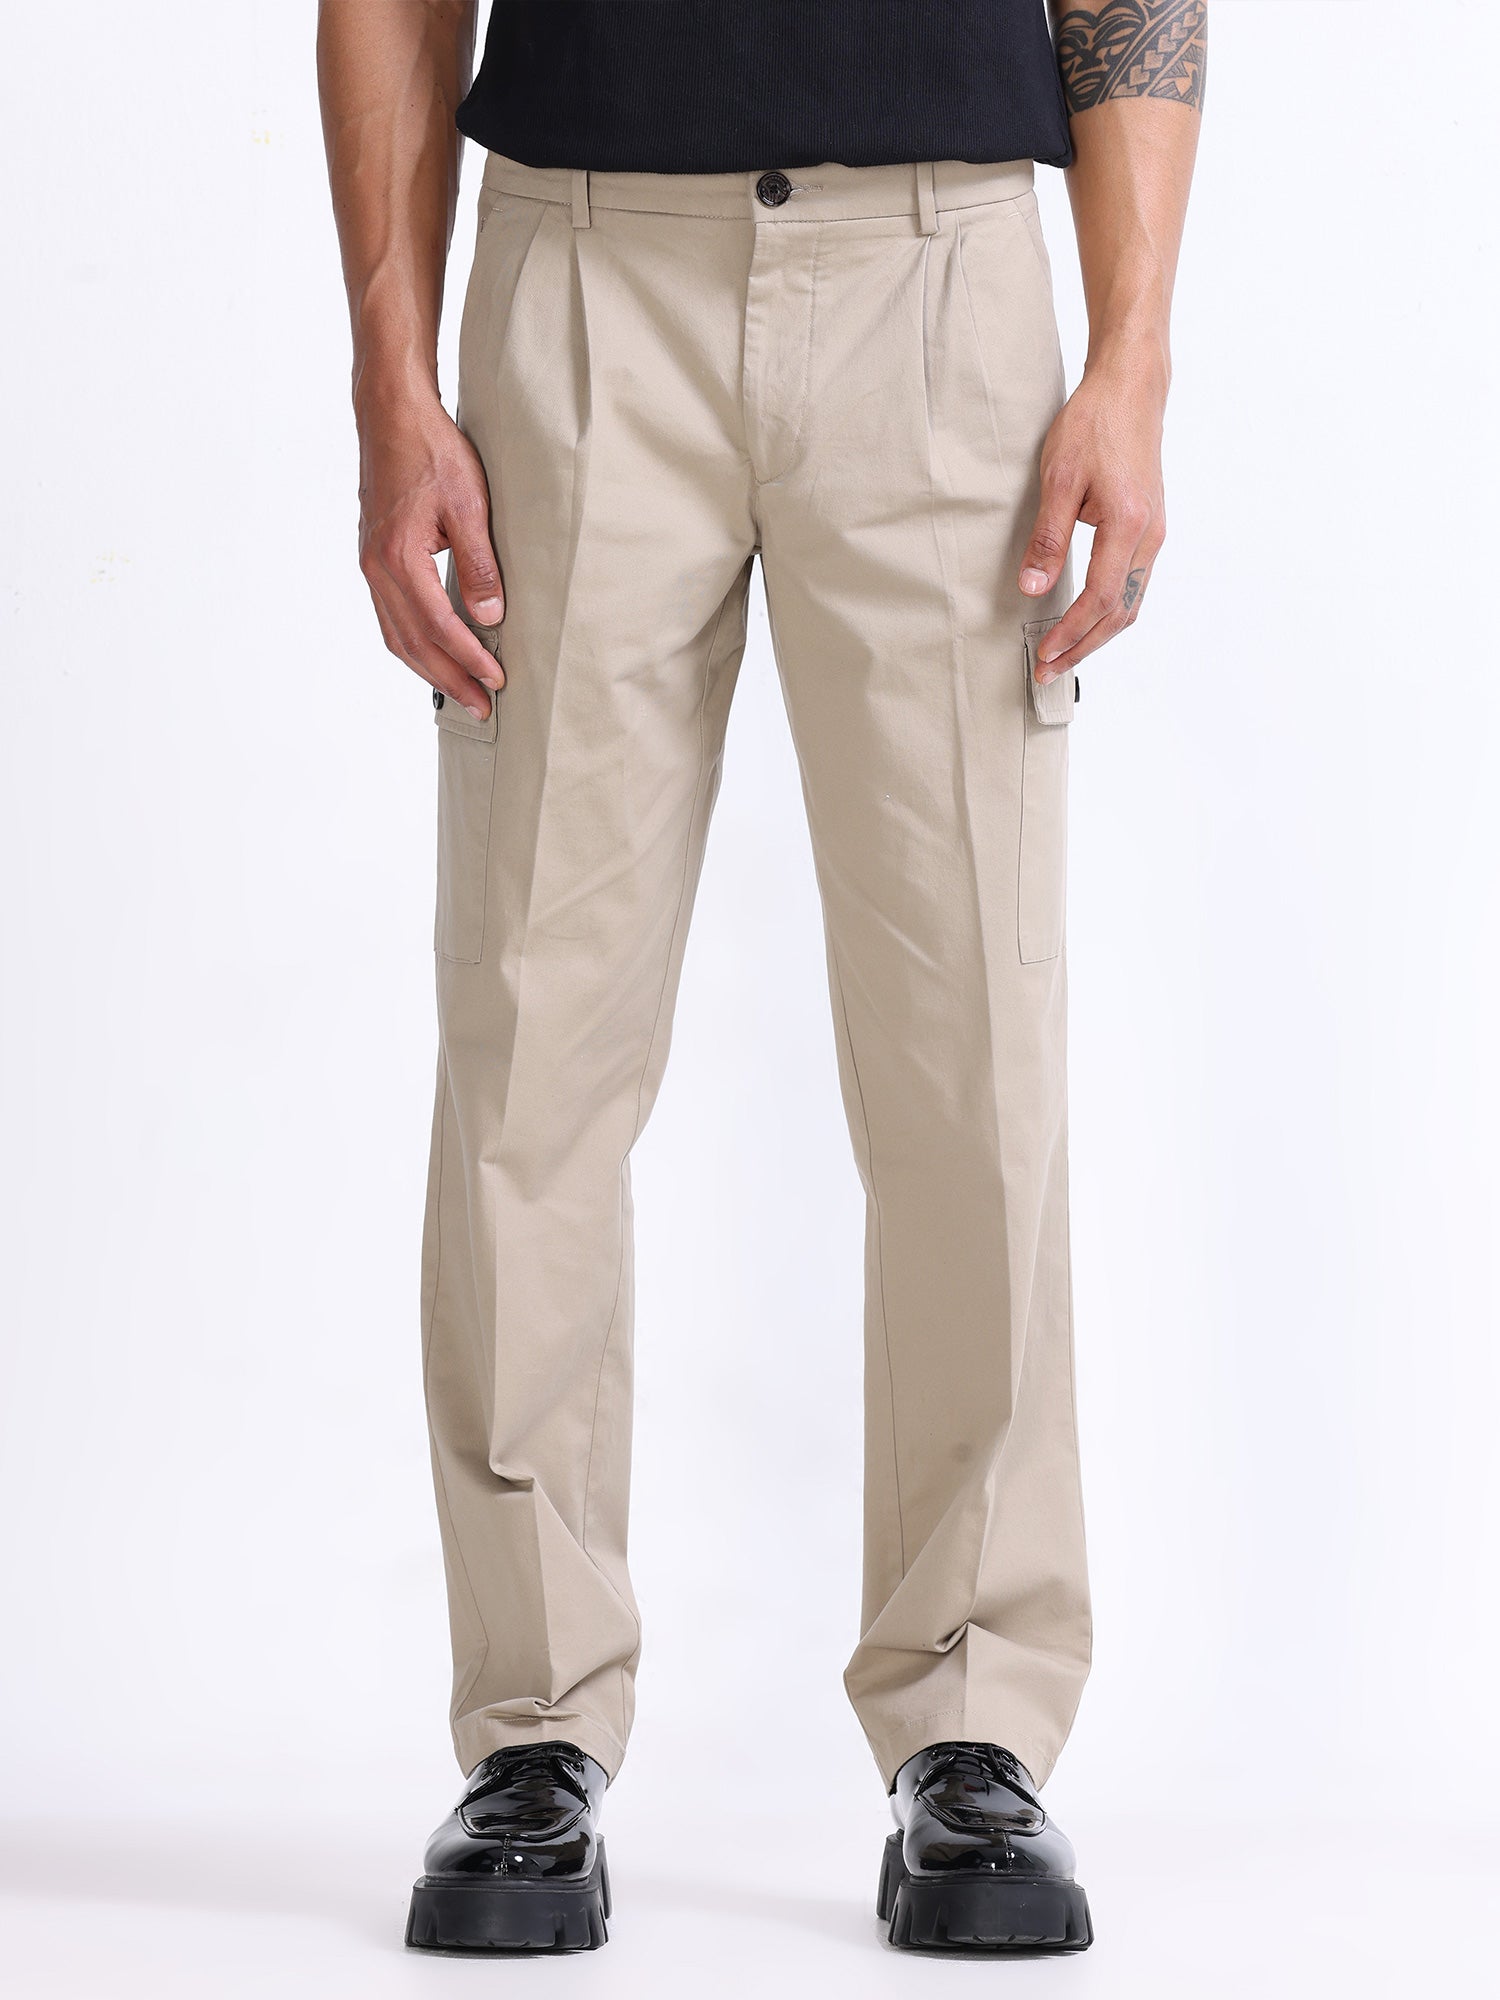 Buy Men's Beige Colour Formal Trouser Online at Best Prices in India -  JioMart.